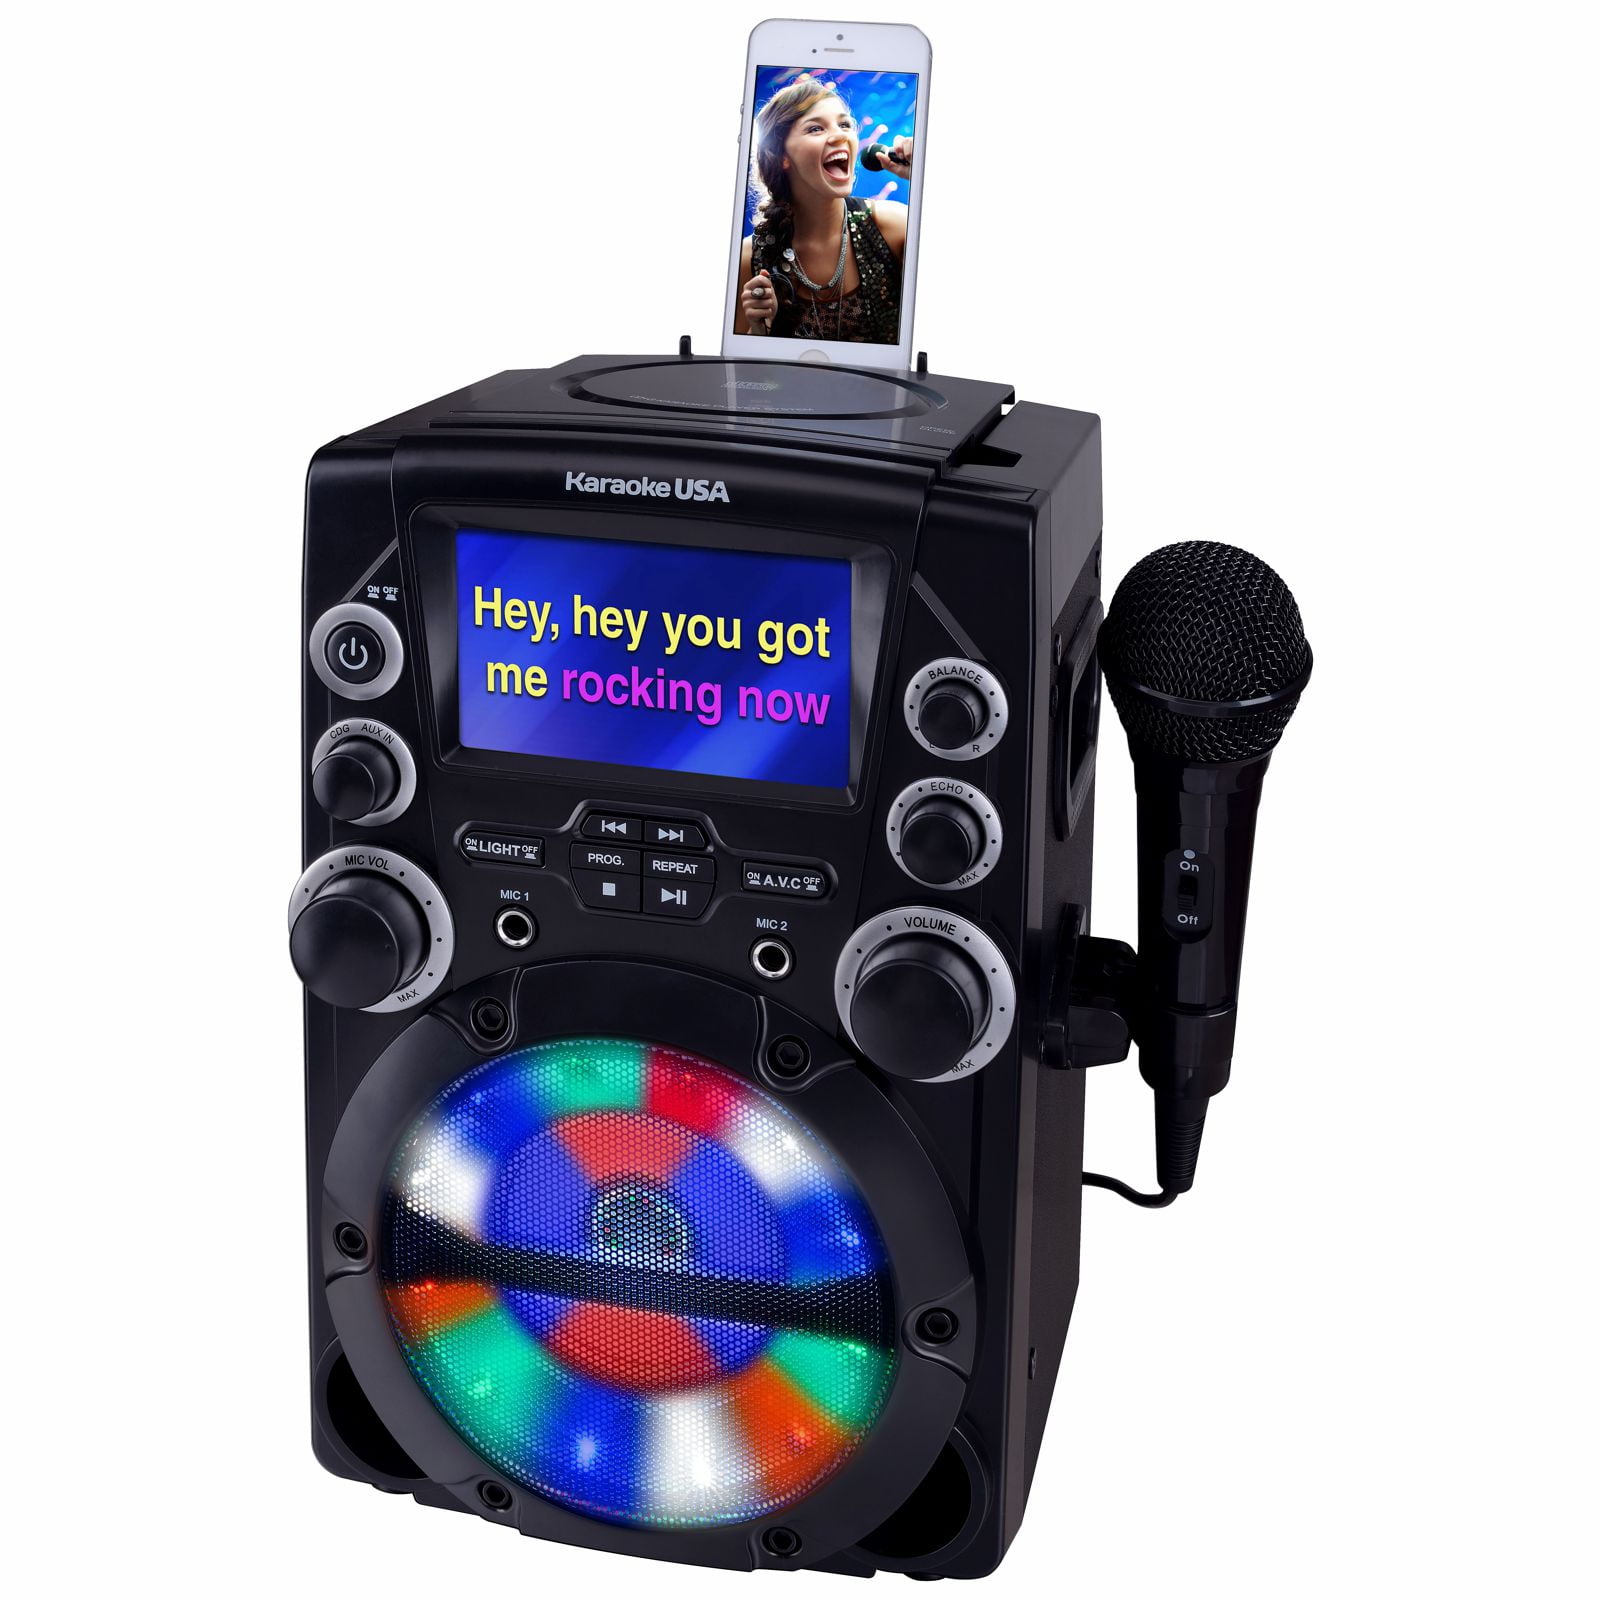 Picture of Karaoke Usa GQ740 4.3 in. Color TFT Screen CDG Karaoke System - Black